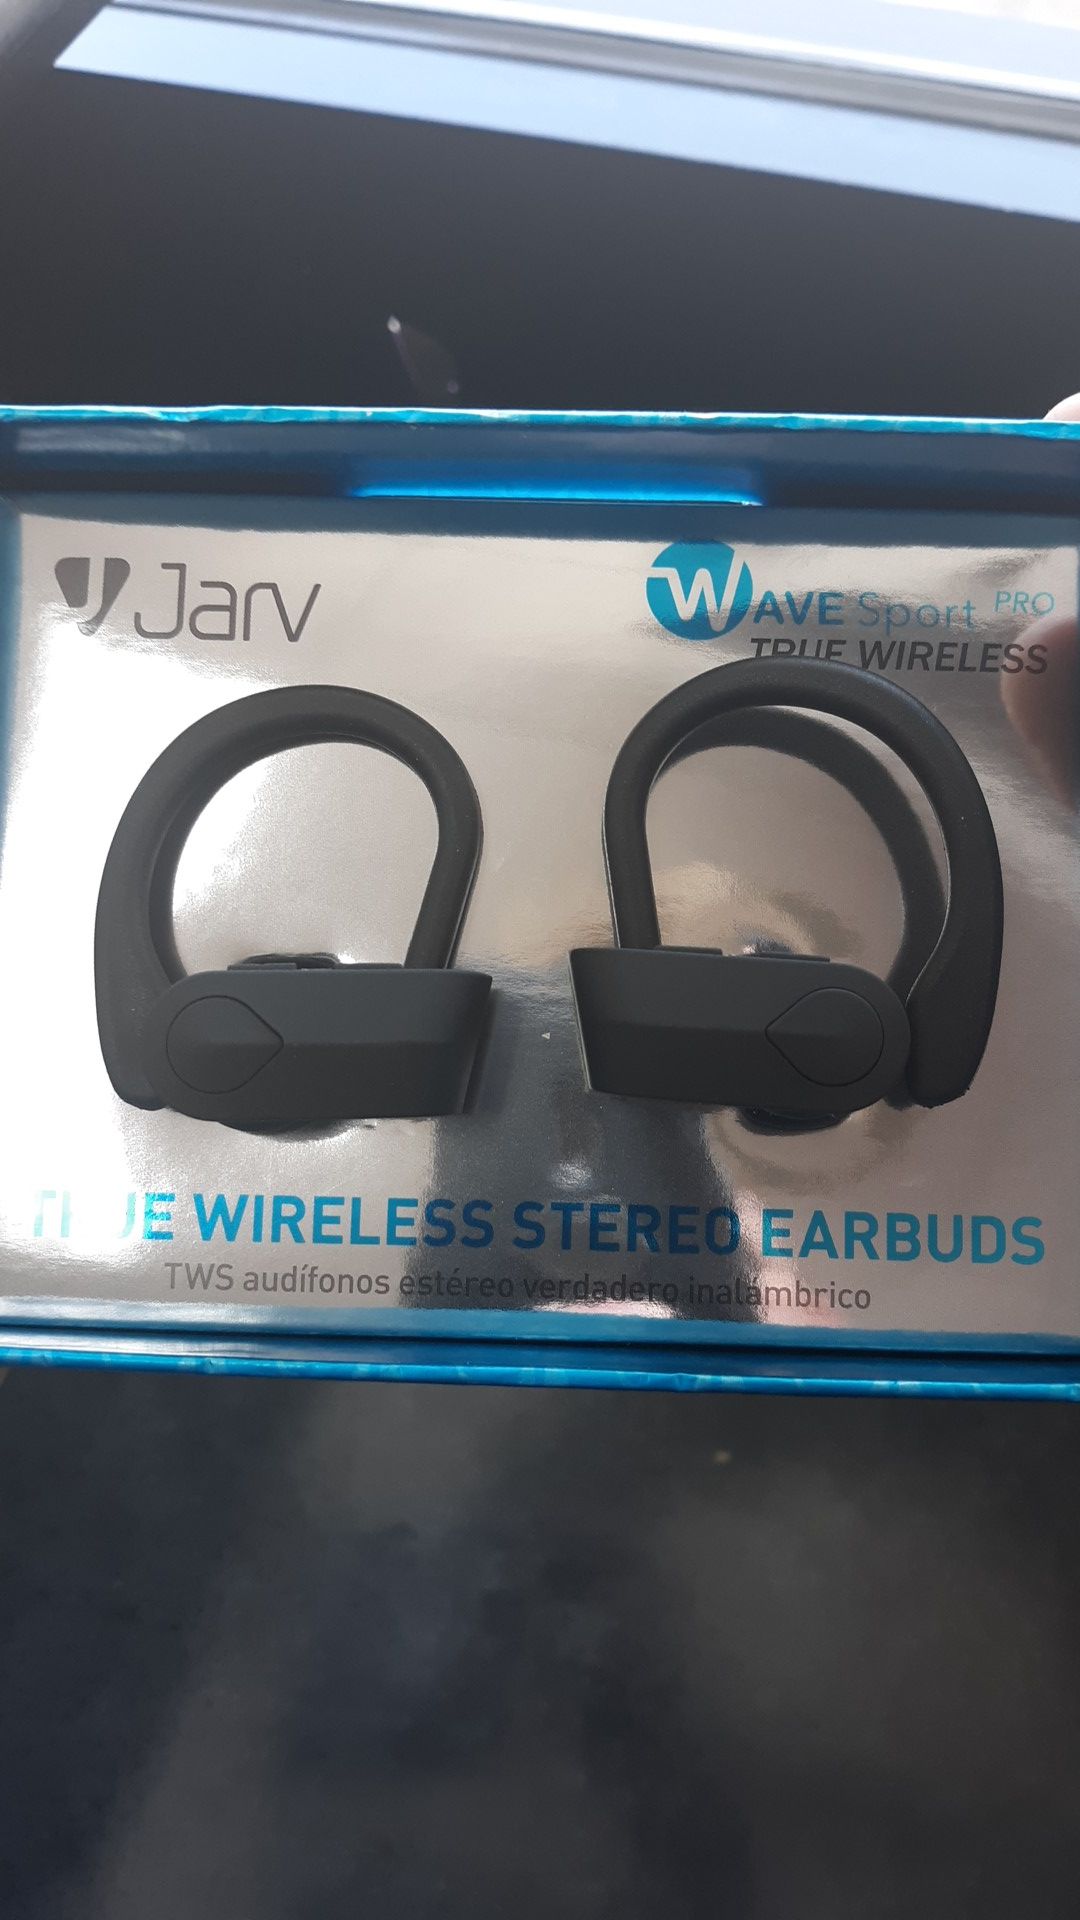 Jarv TRUE wireless earbuds